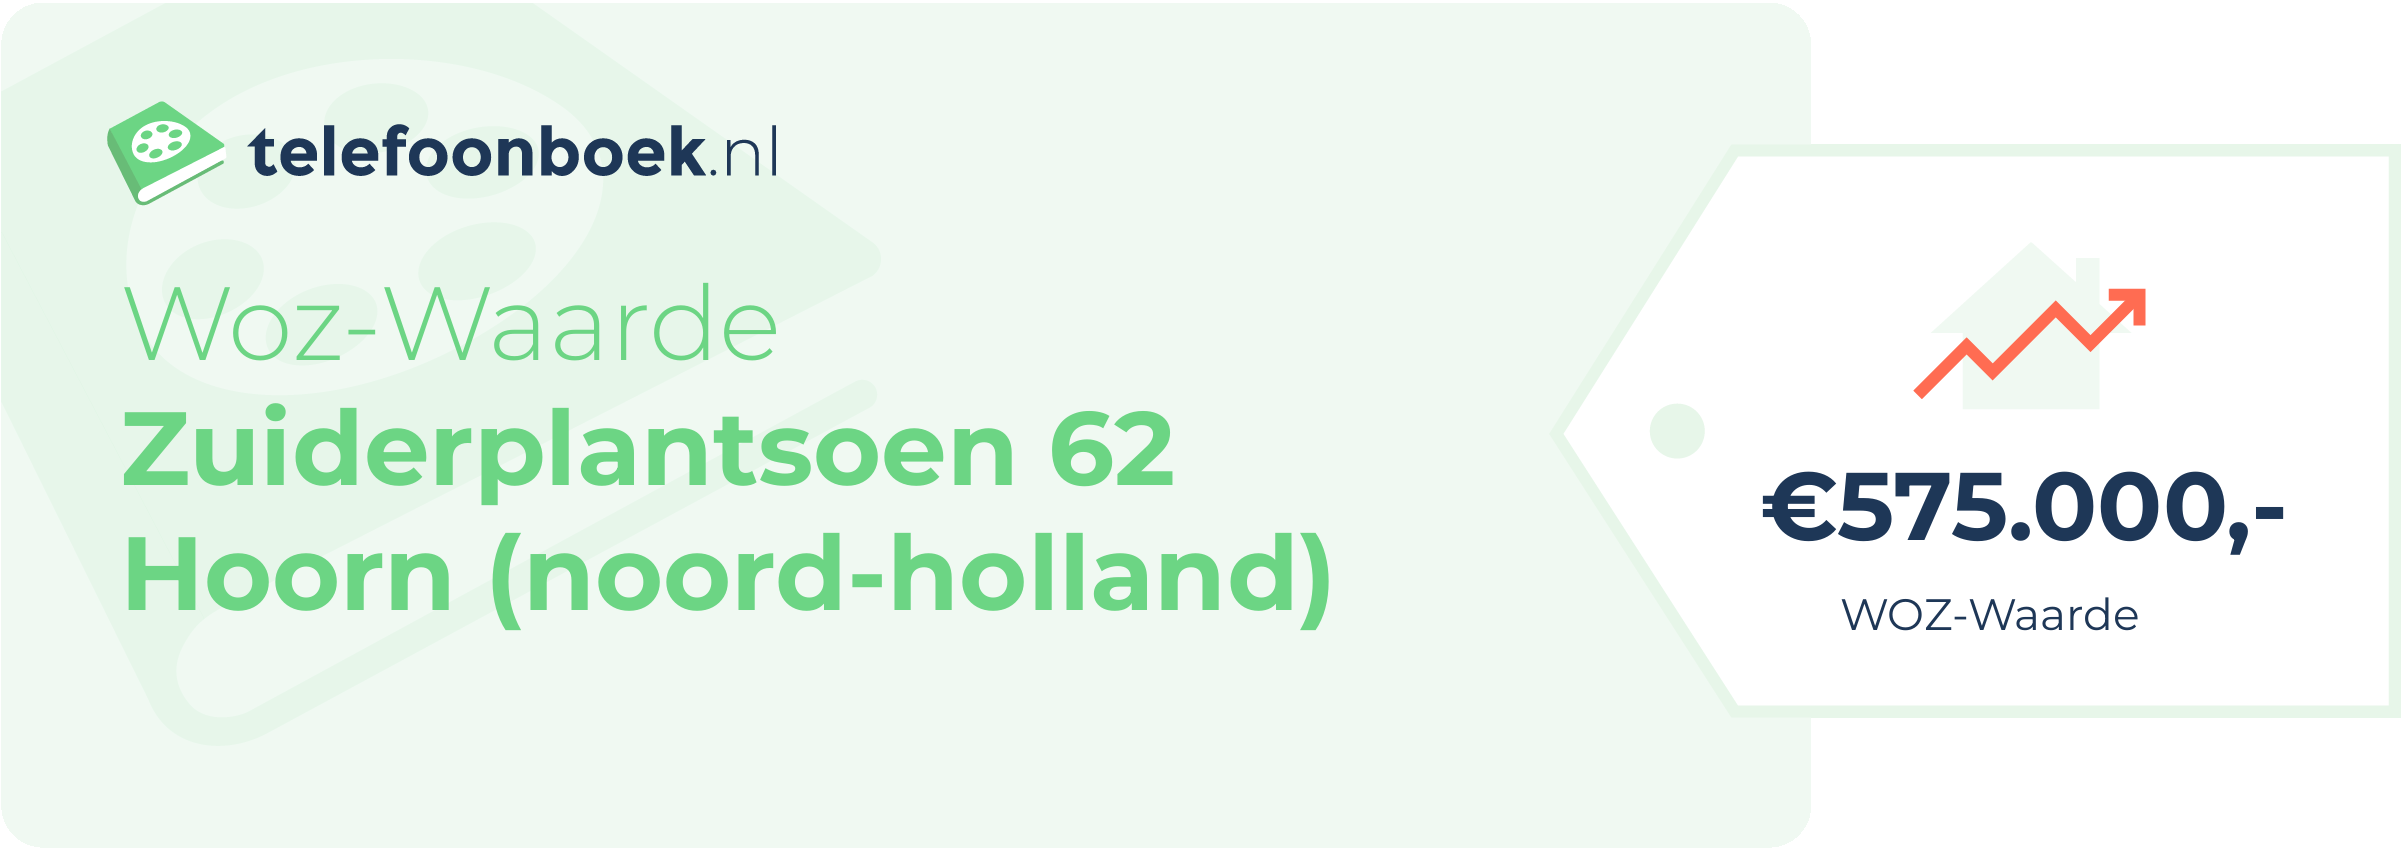 WOZ-waarde Zuiderplantsoen 62 Hoorn (Noord-Holland)